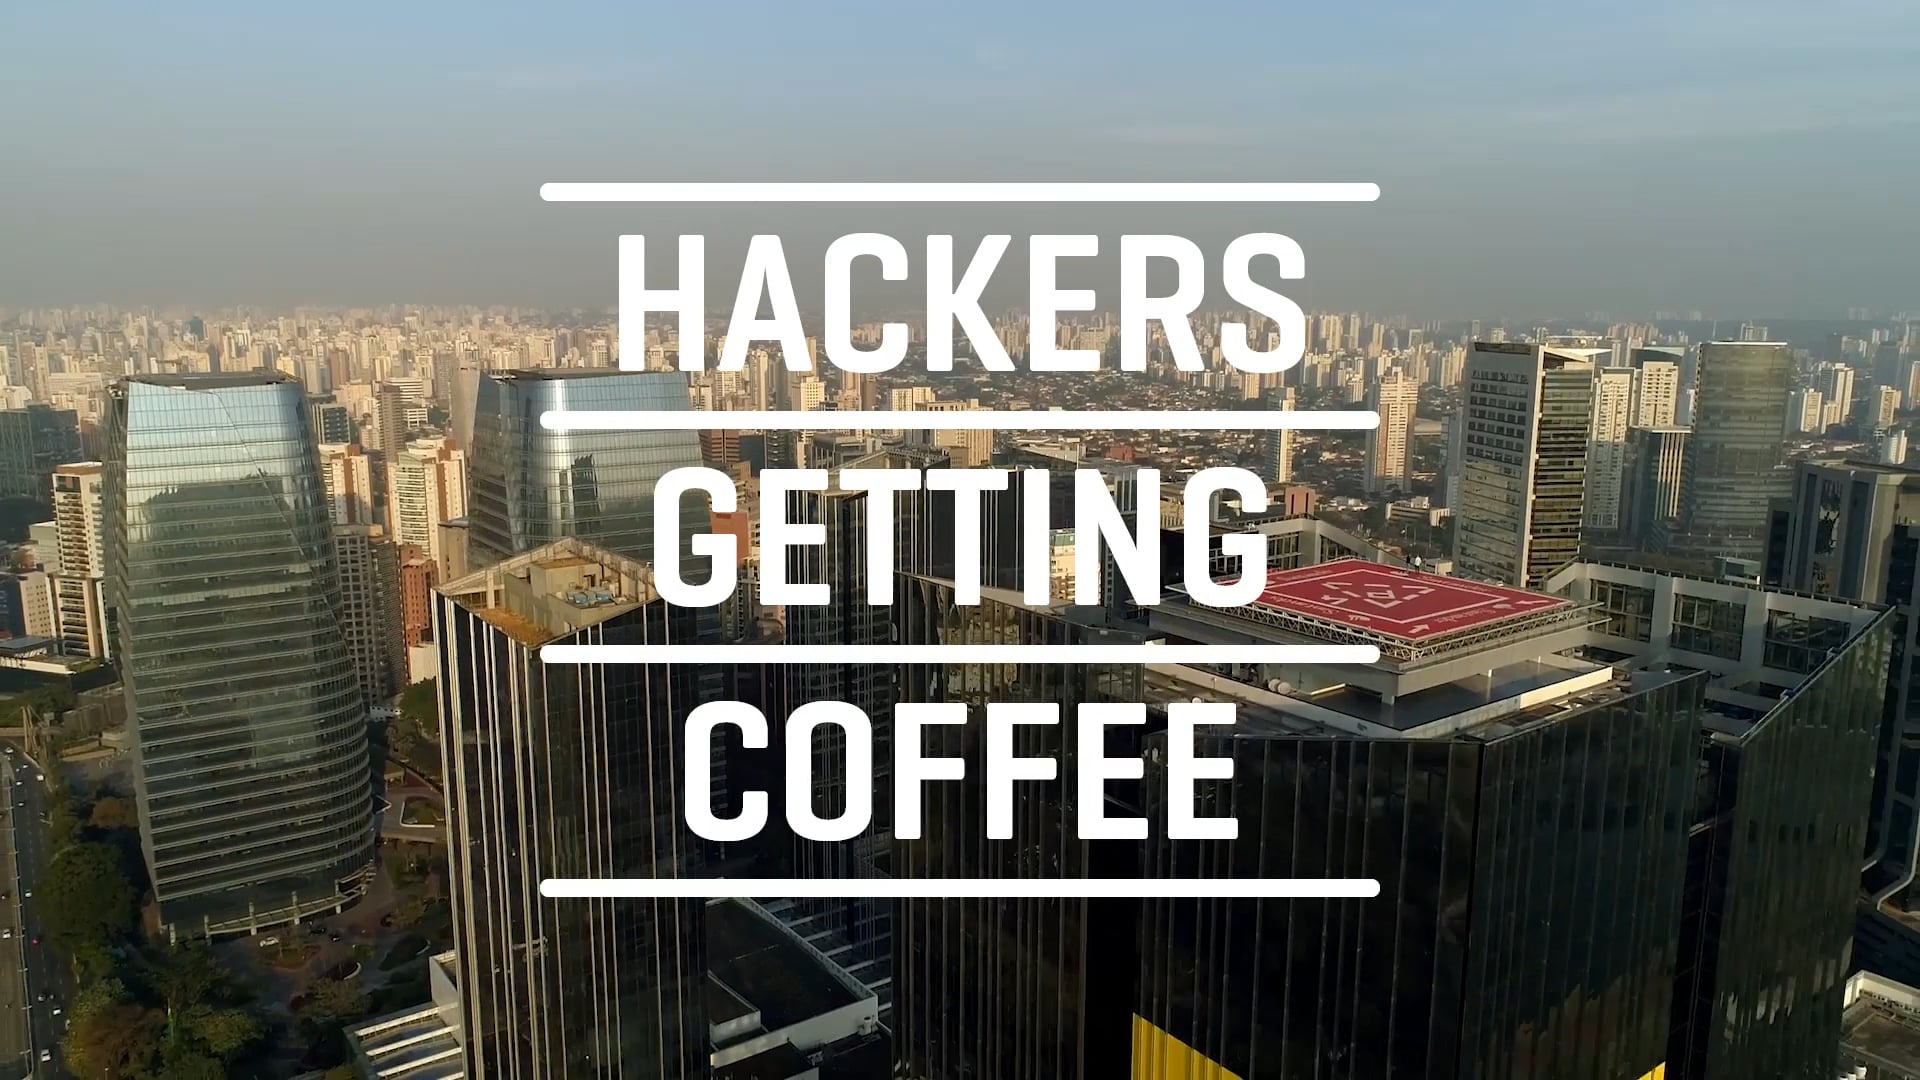 Santander I Hackers getting Coffe